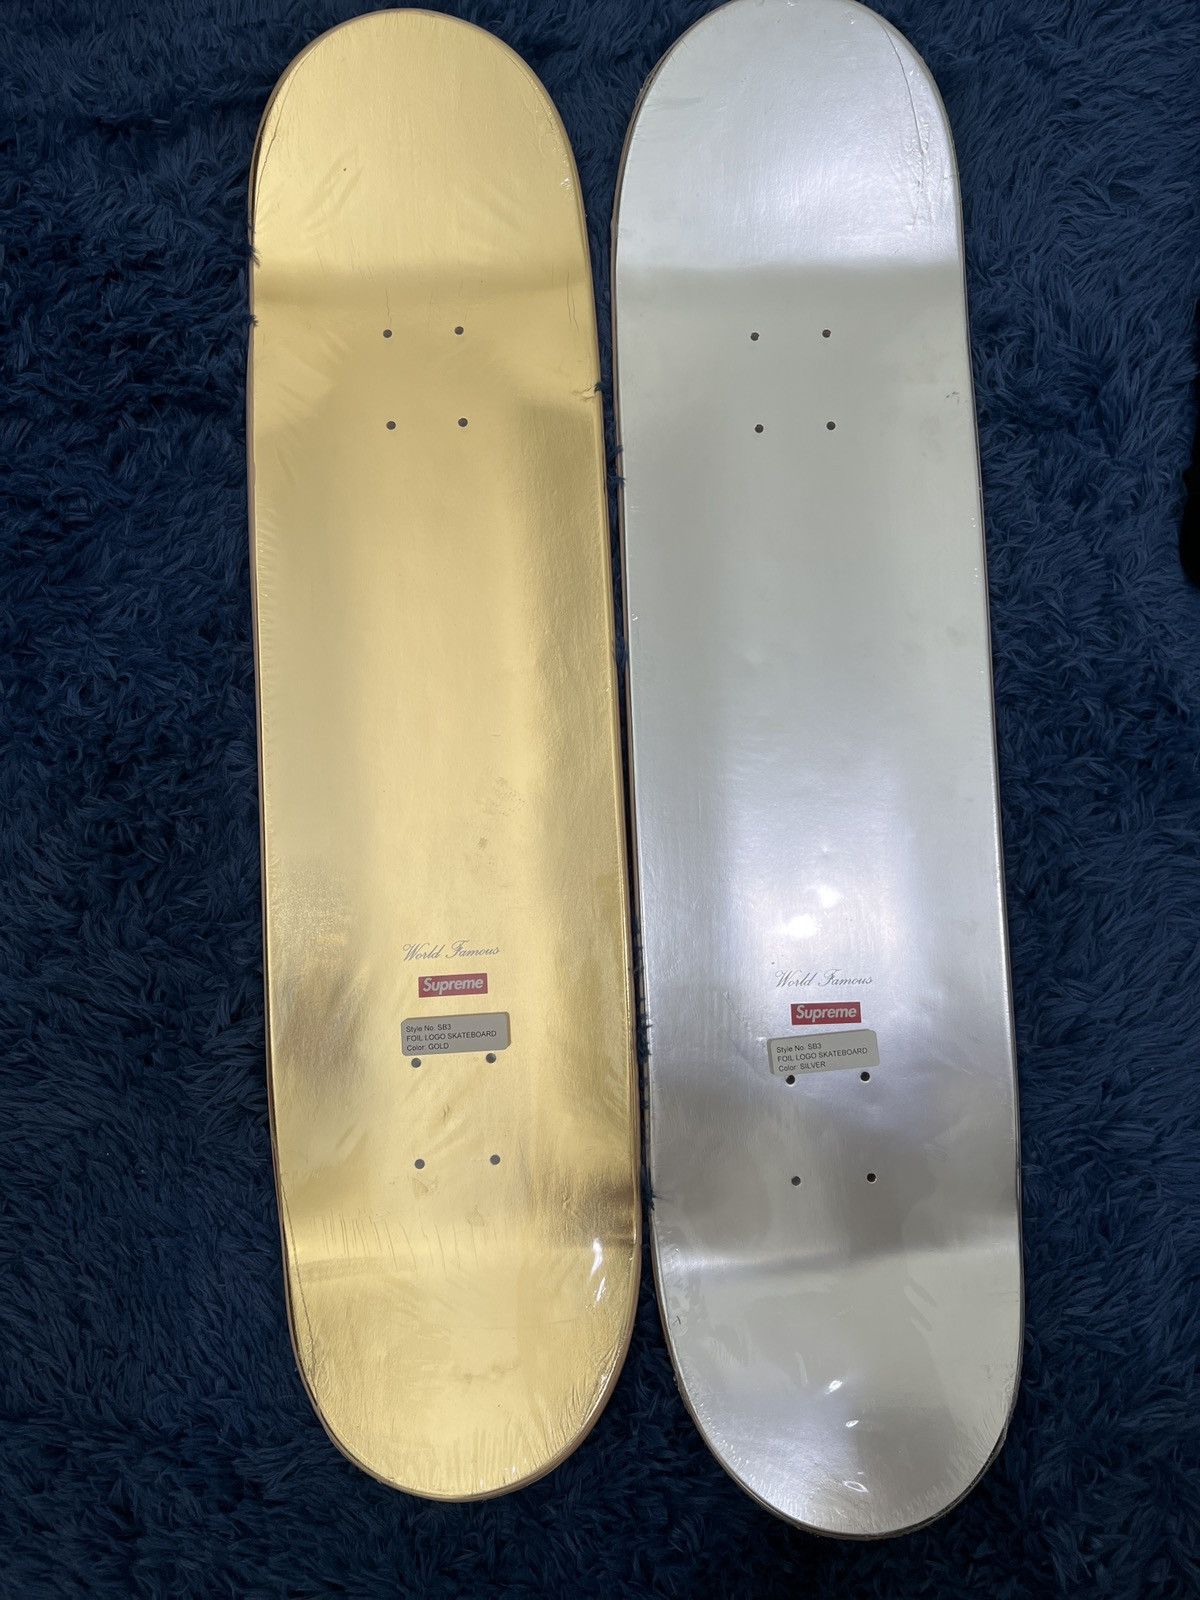 Supreme Supreme Gold Silver Foil Deck Skateboard Skate SS09 15 